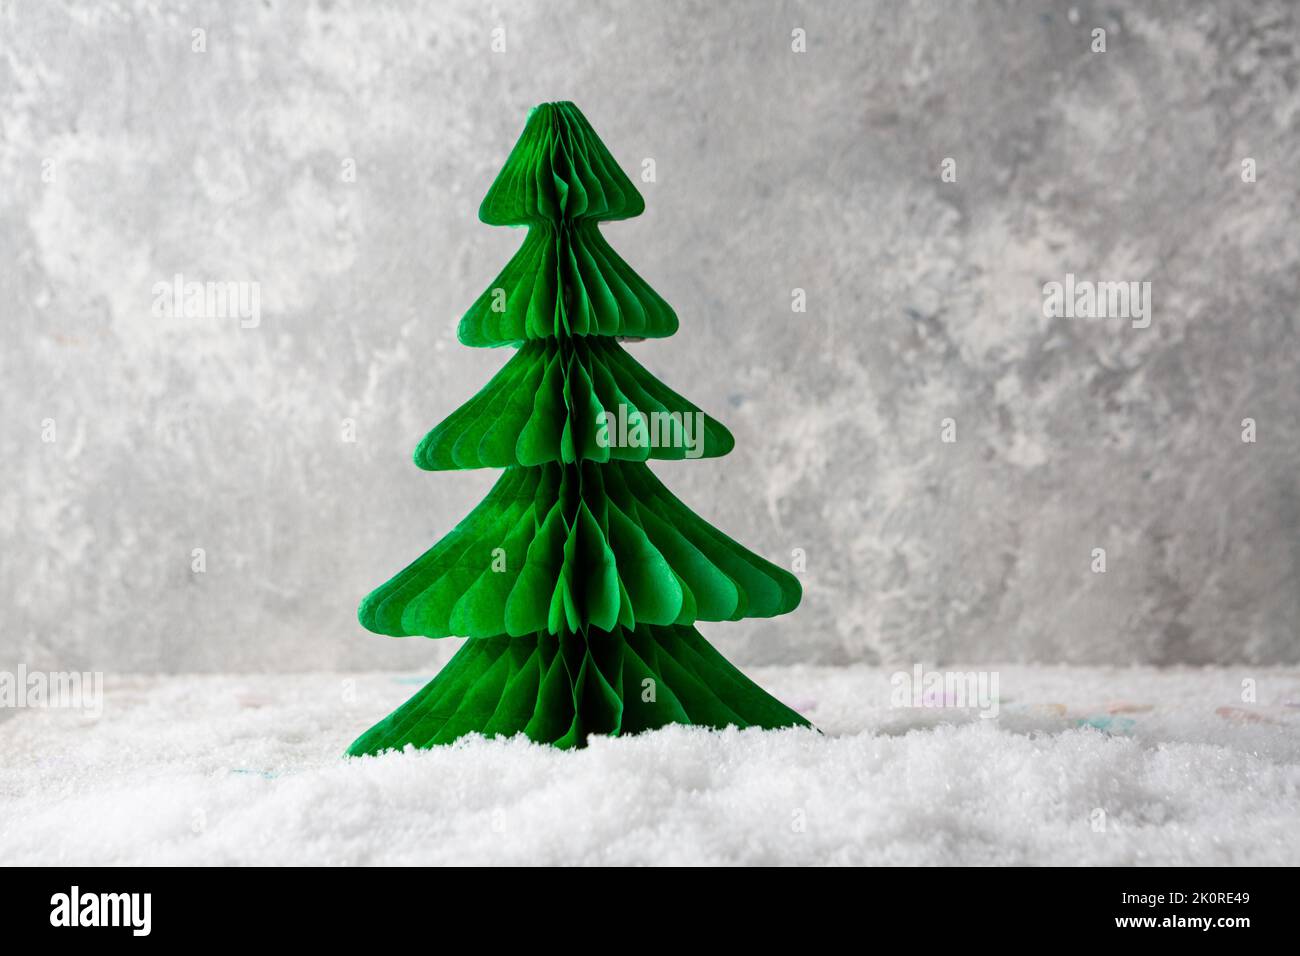 Green paper Christmas tree holiday decor Stock Photo